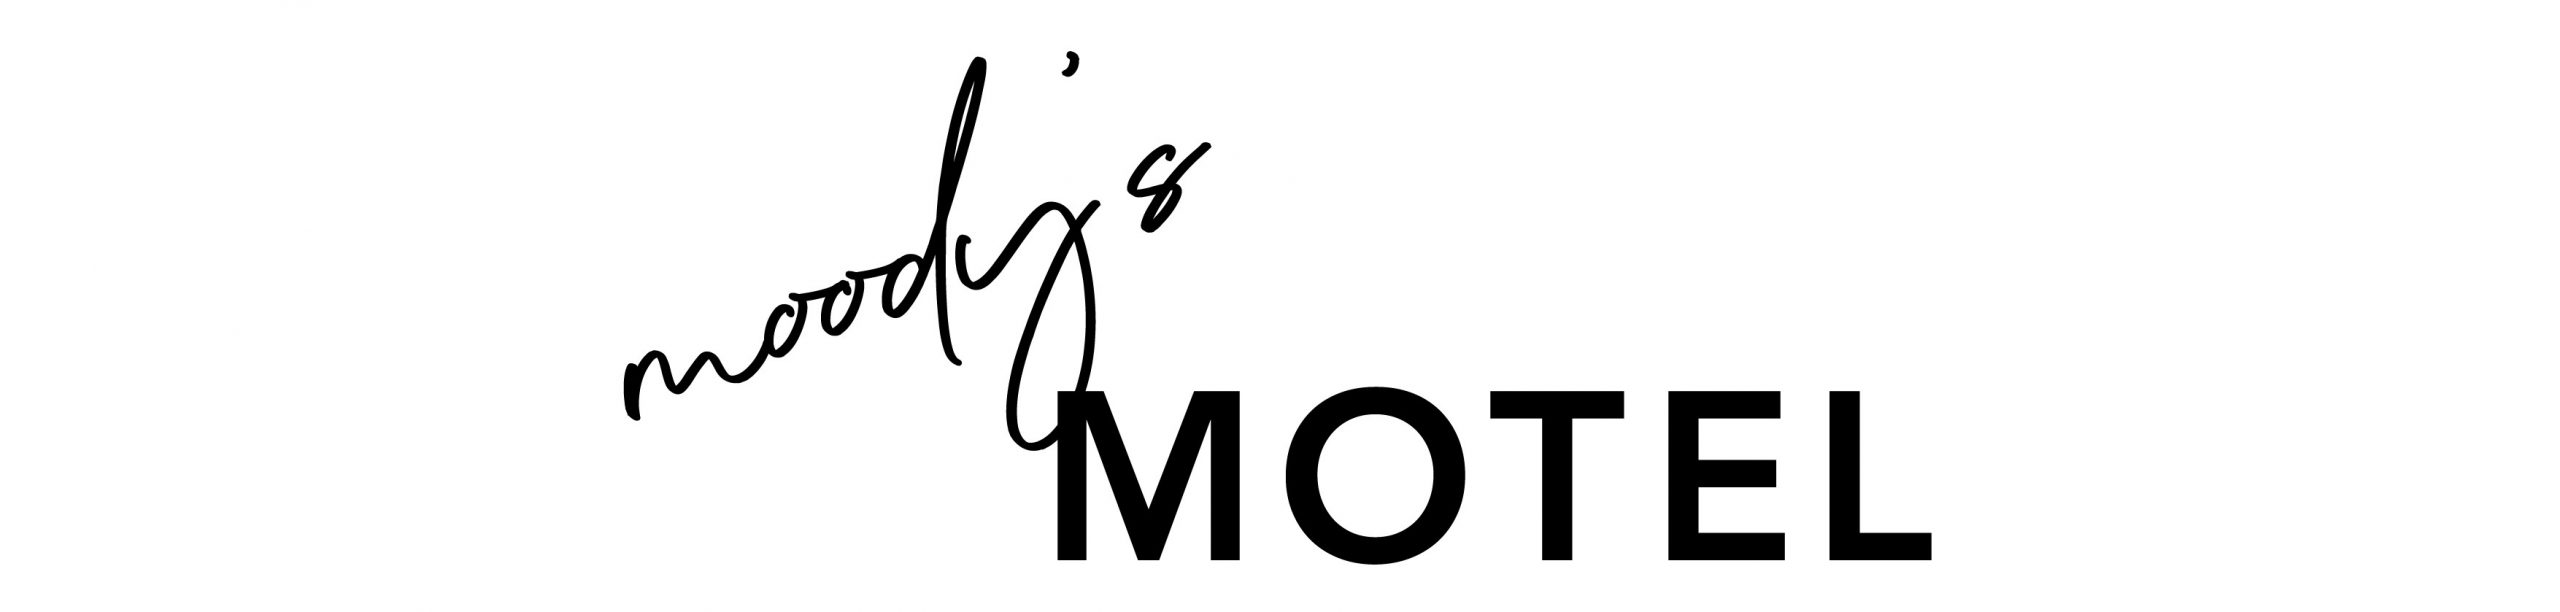 Moodys Motel